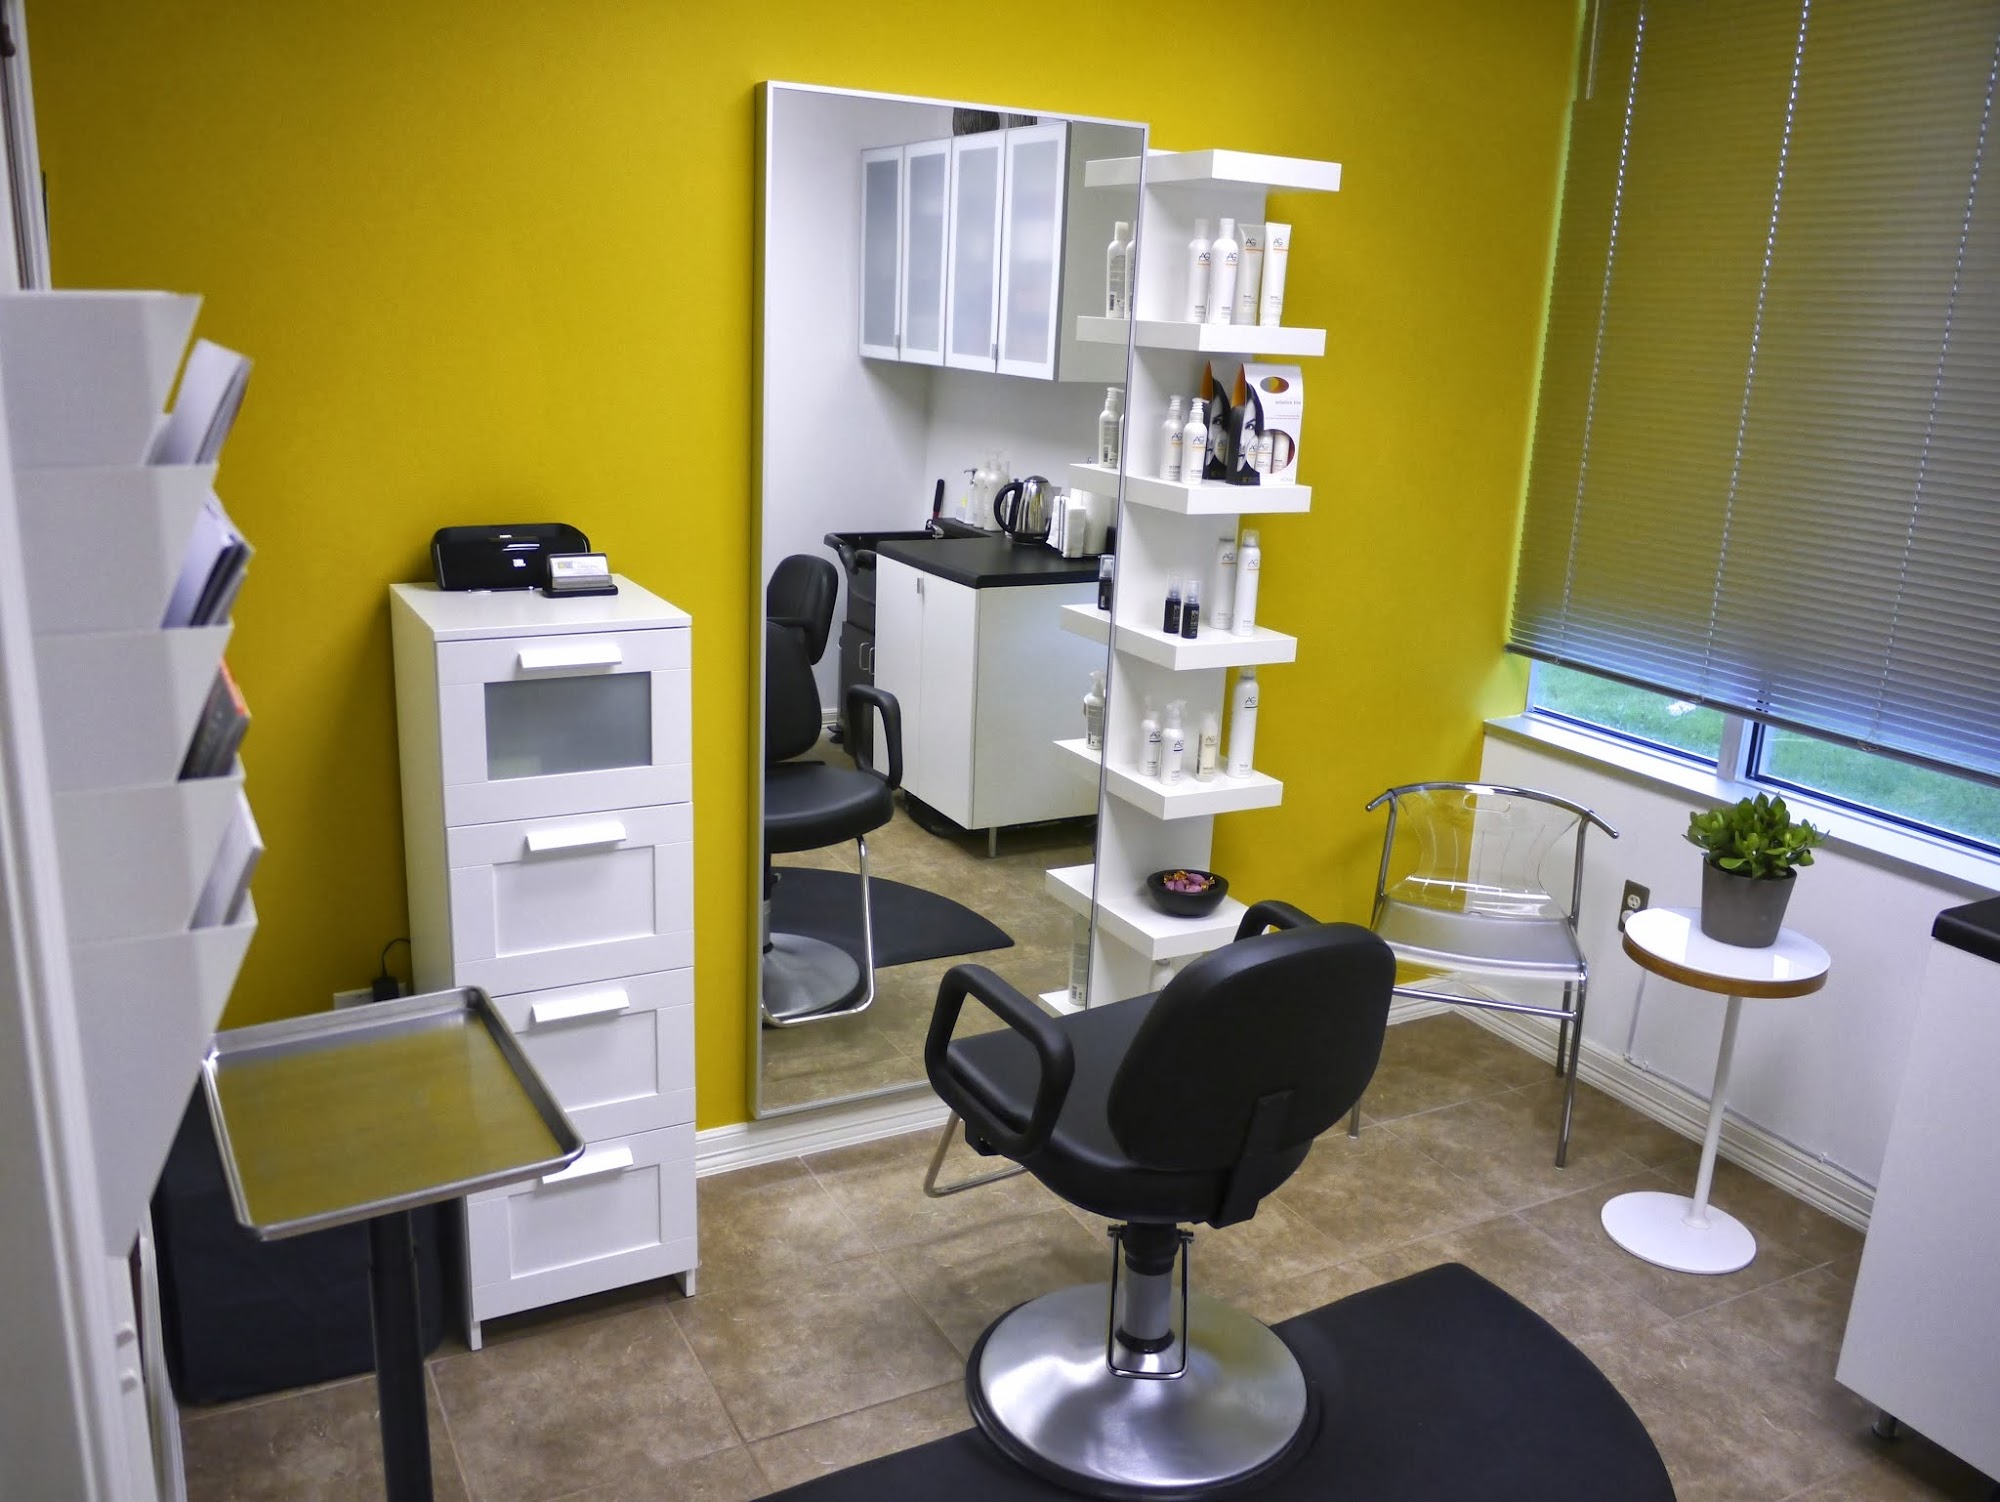 B52 Hairstudio